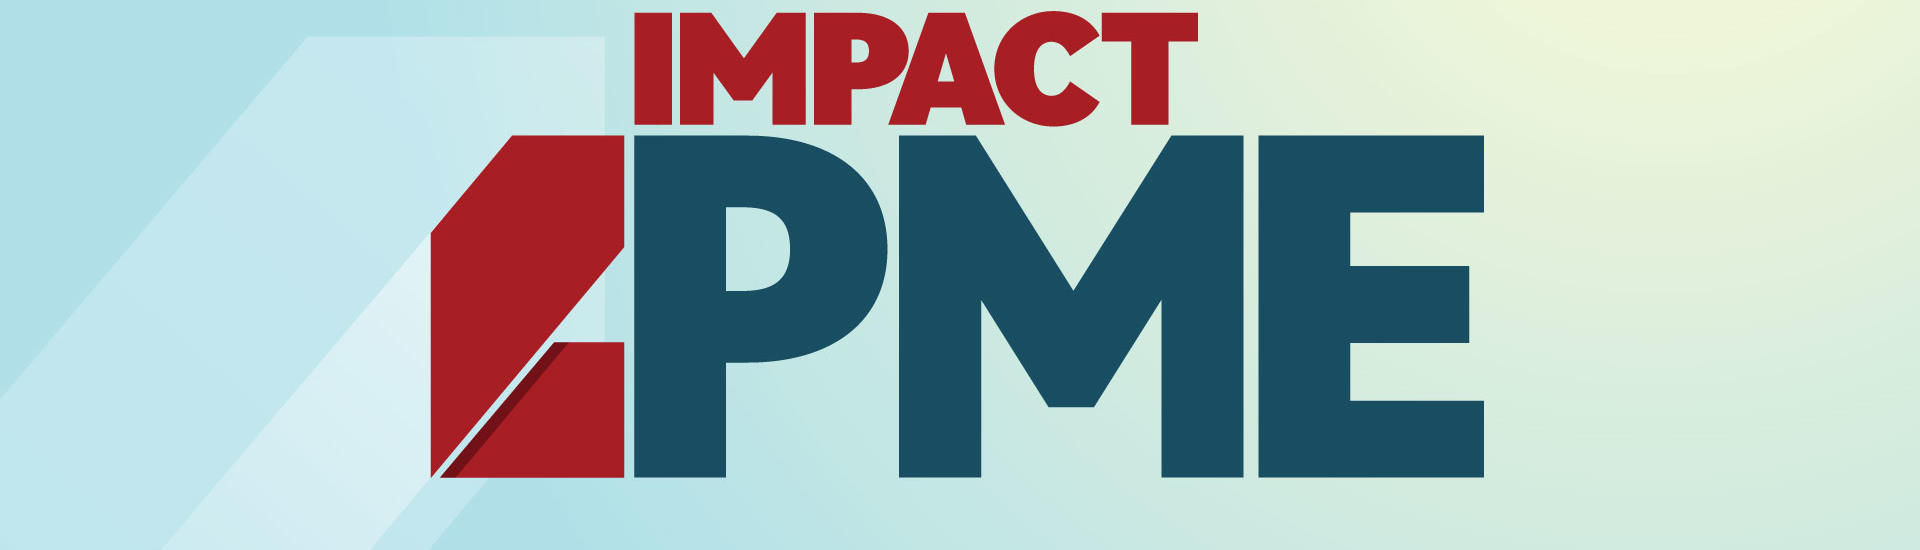 logo Impact PME